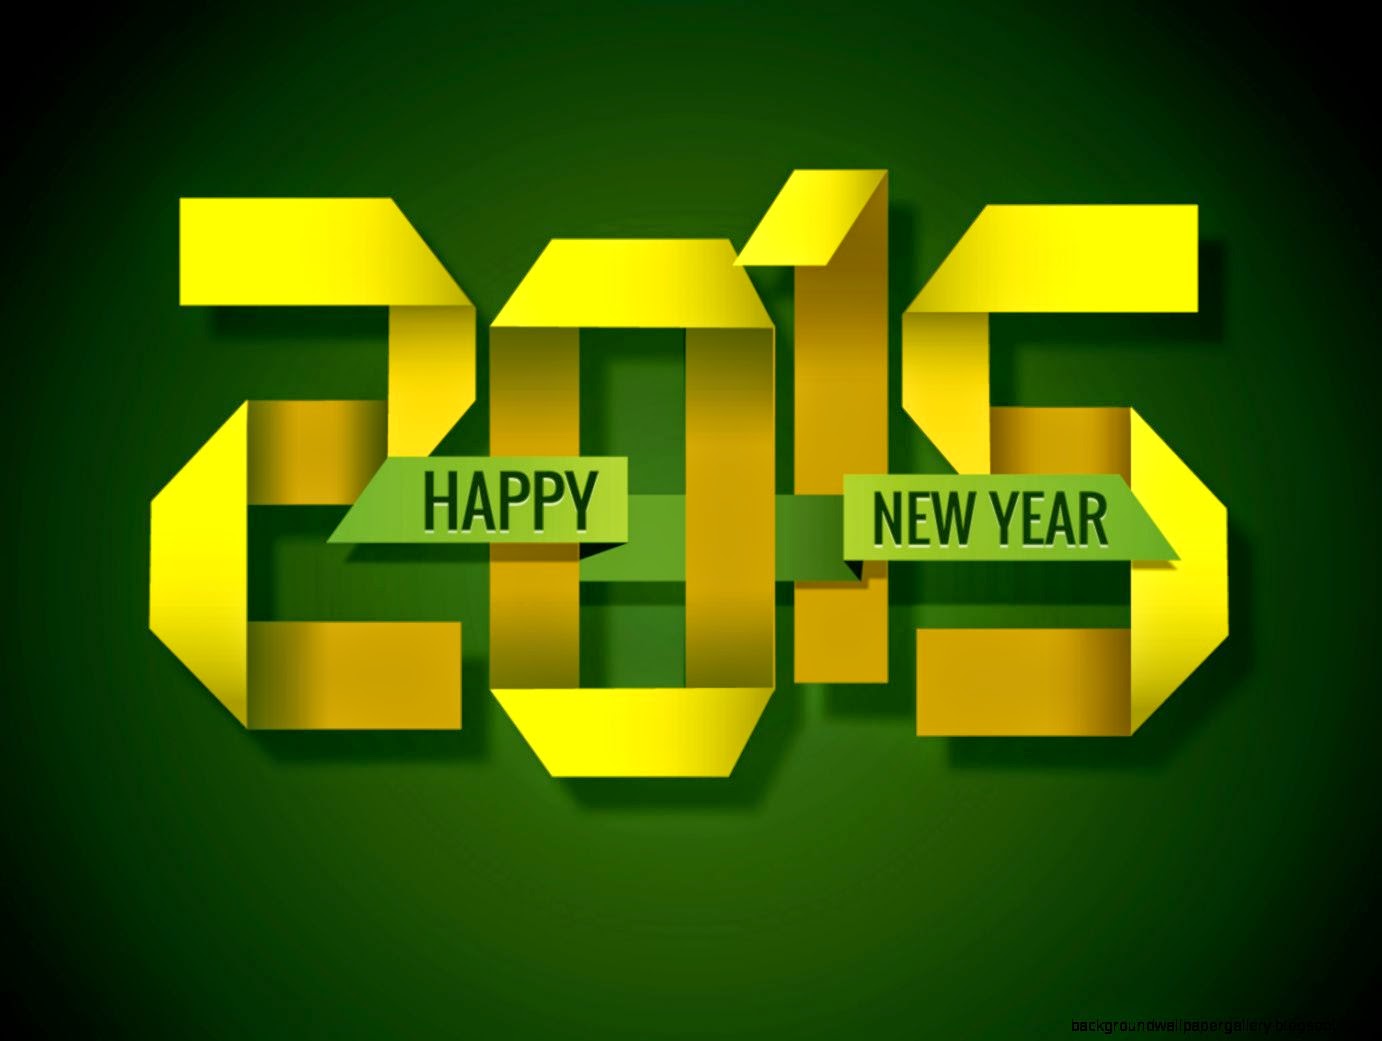 Design Happy New Year Green Wallpaper